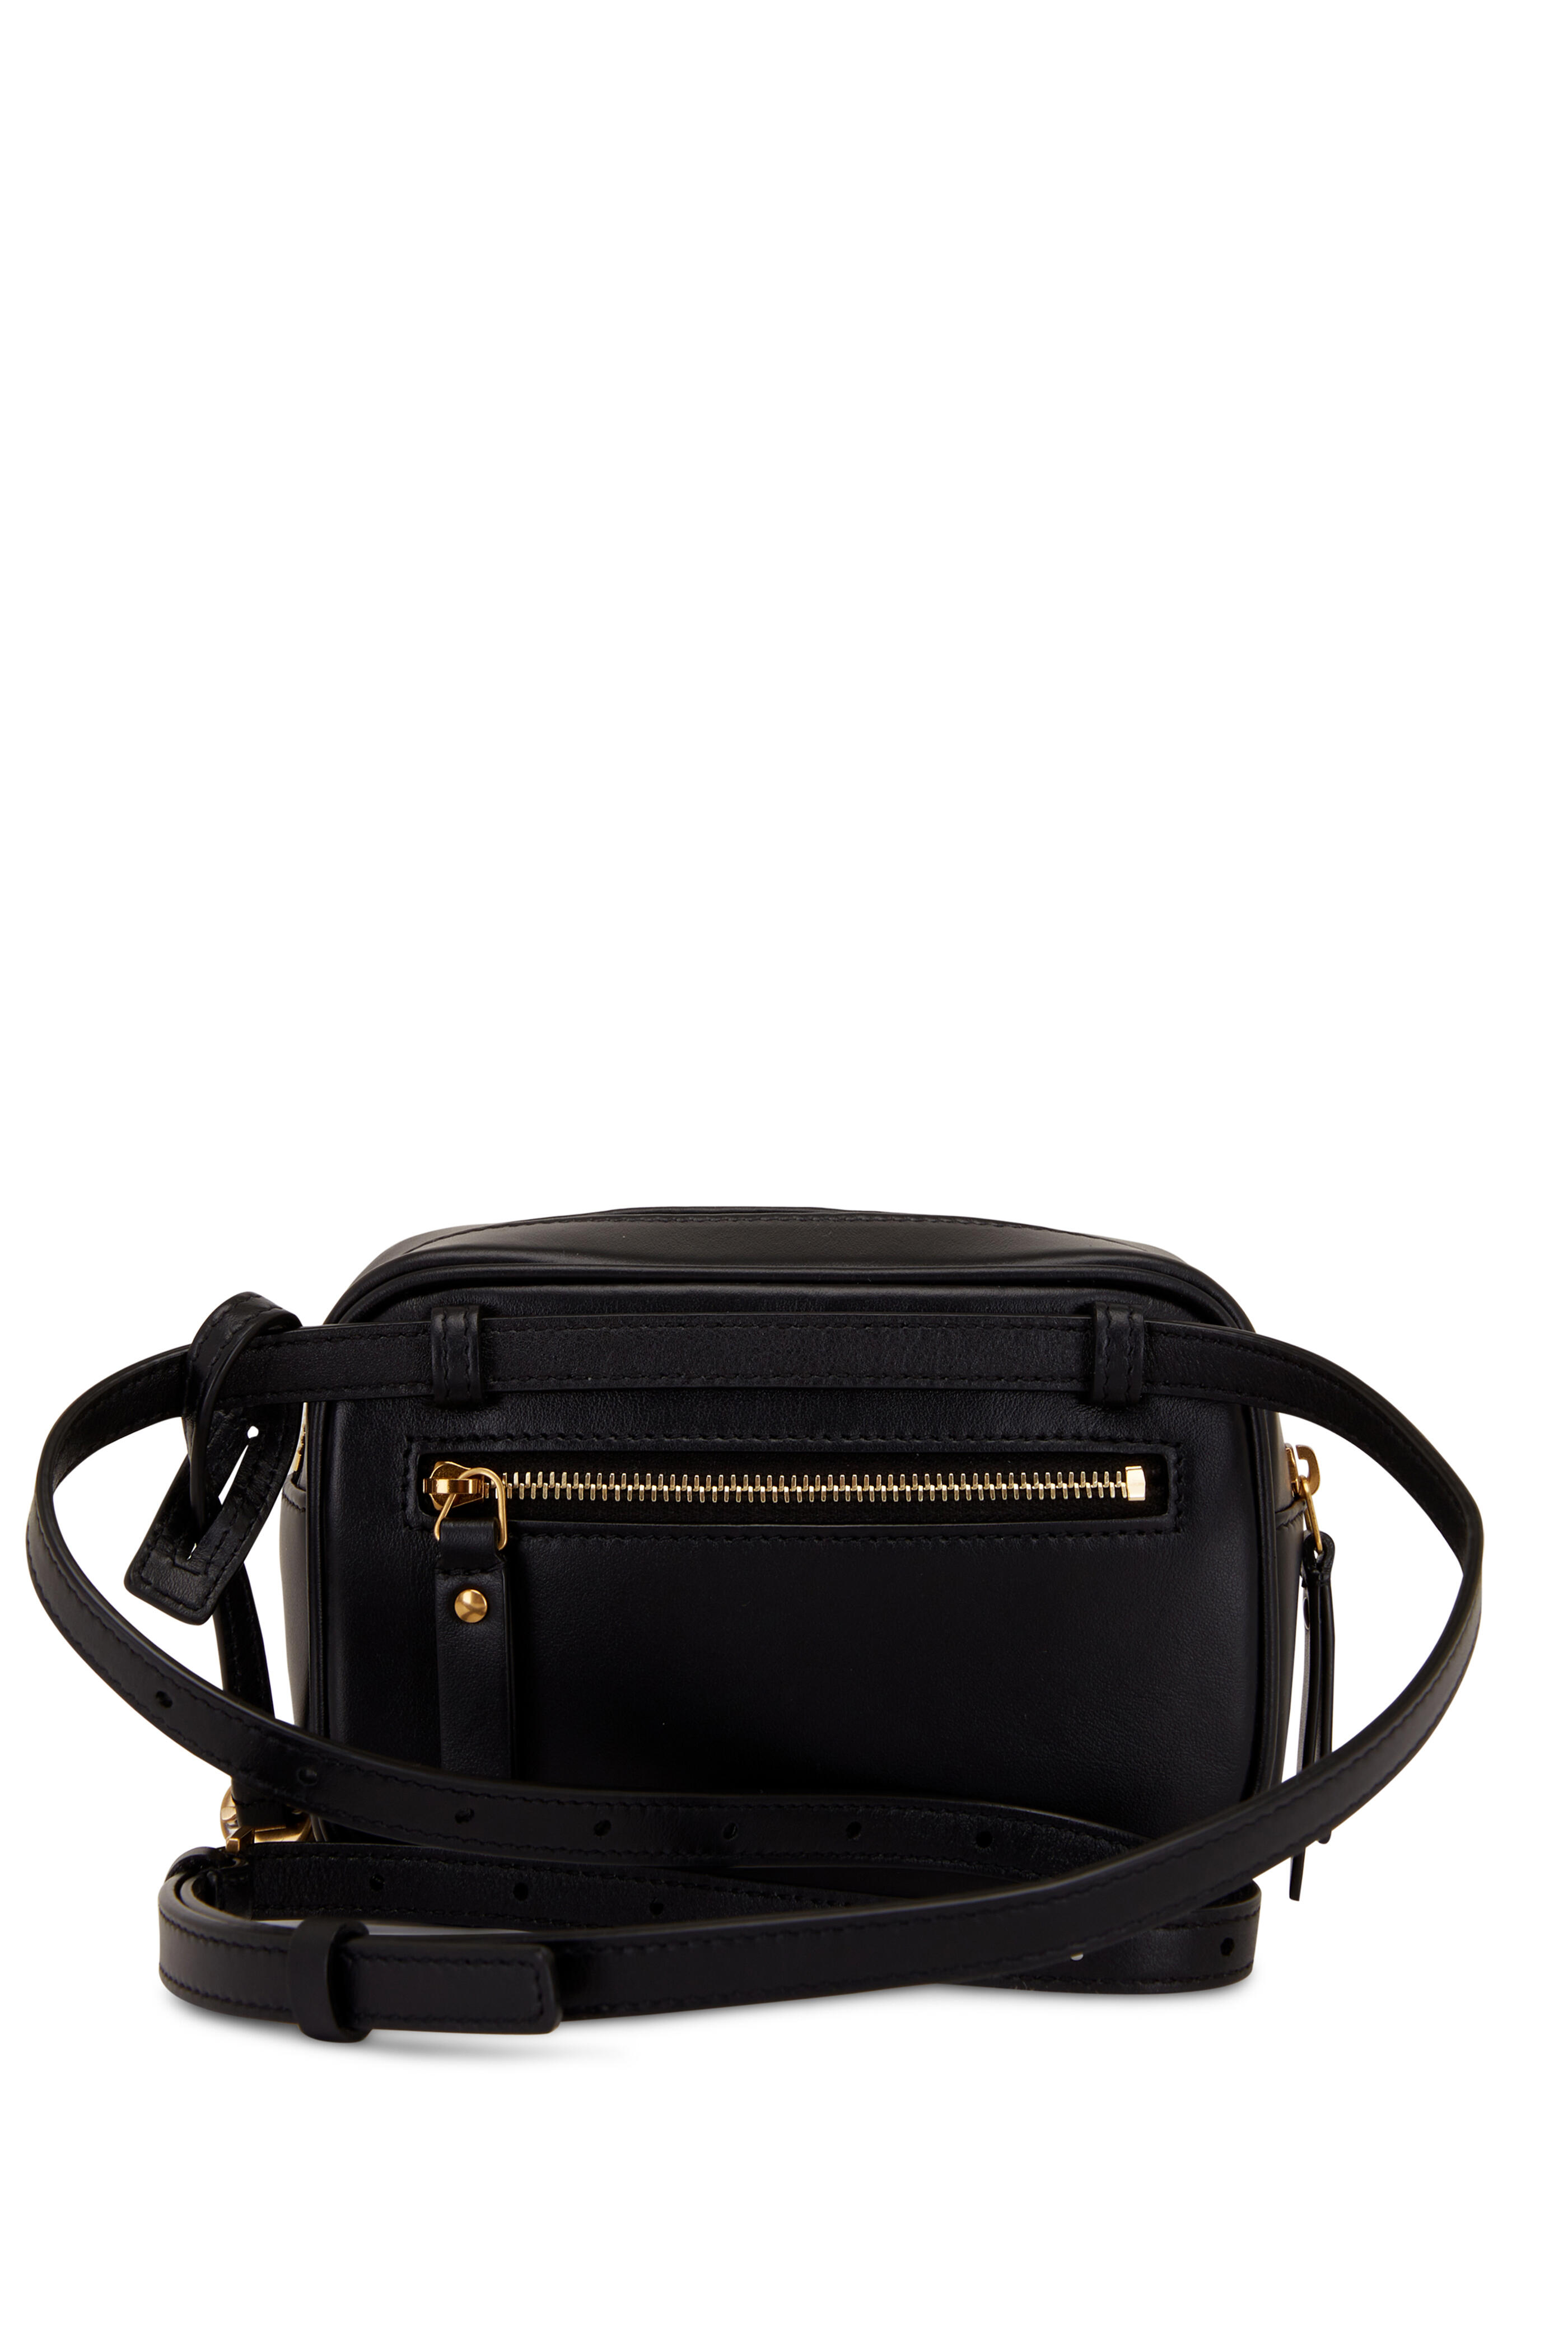 Saint Laurent Lou Quilted Leather Belt Bag in Black